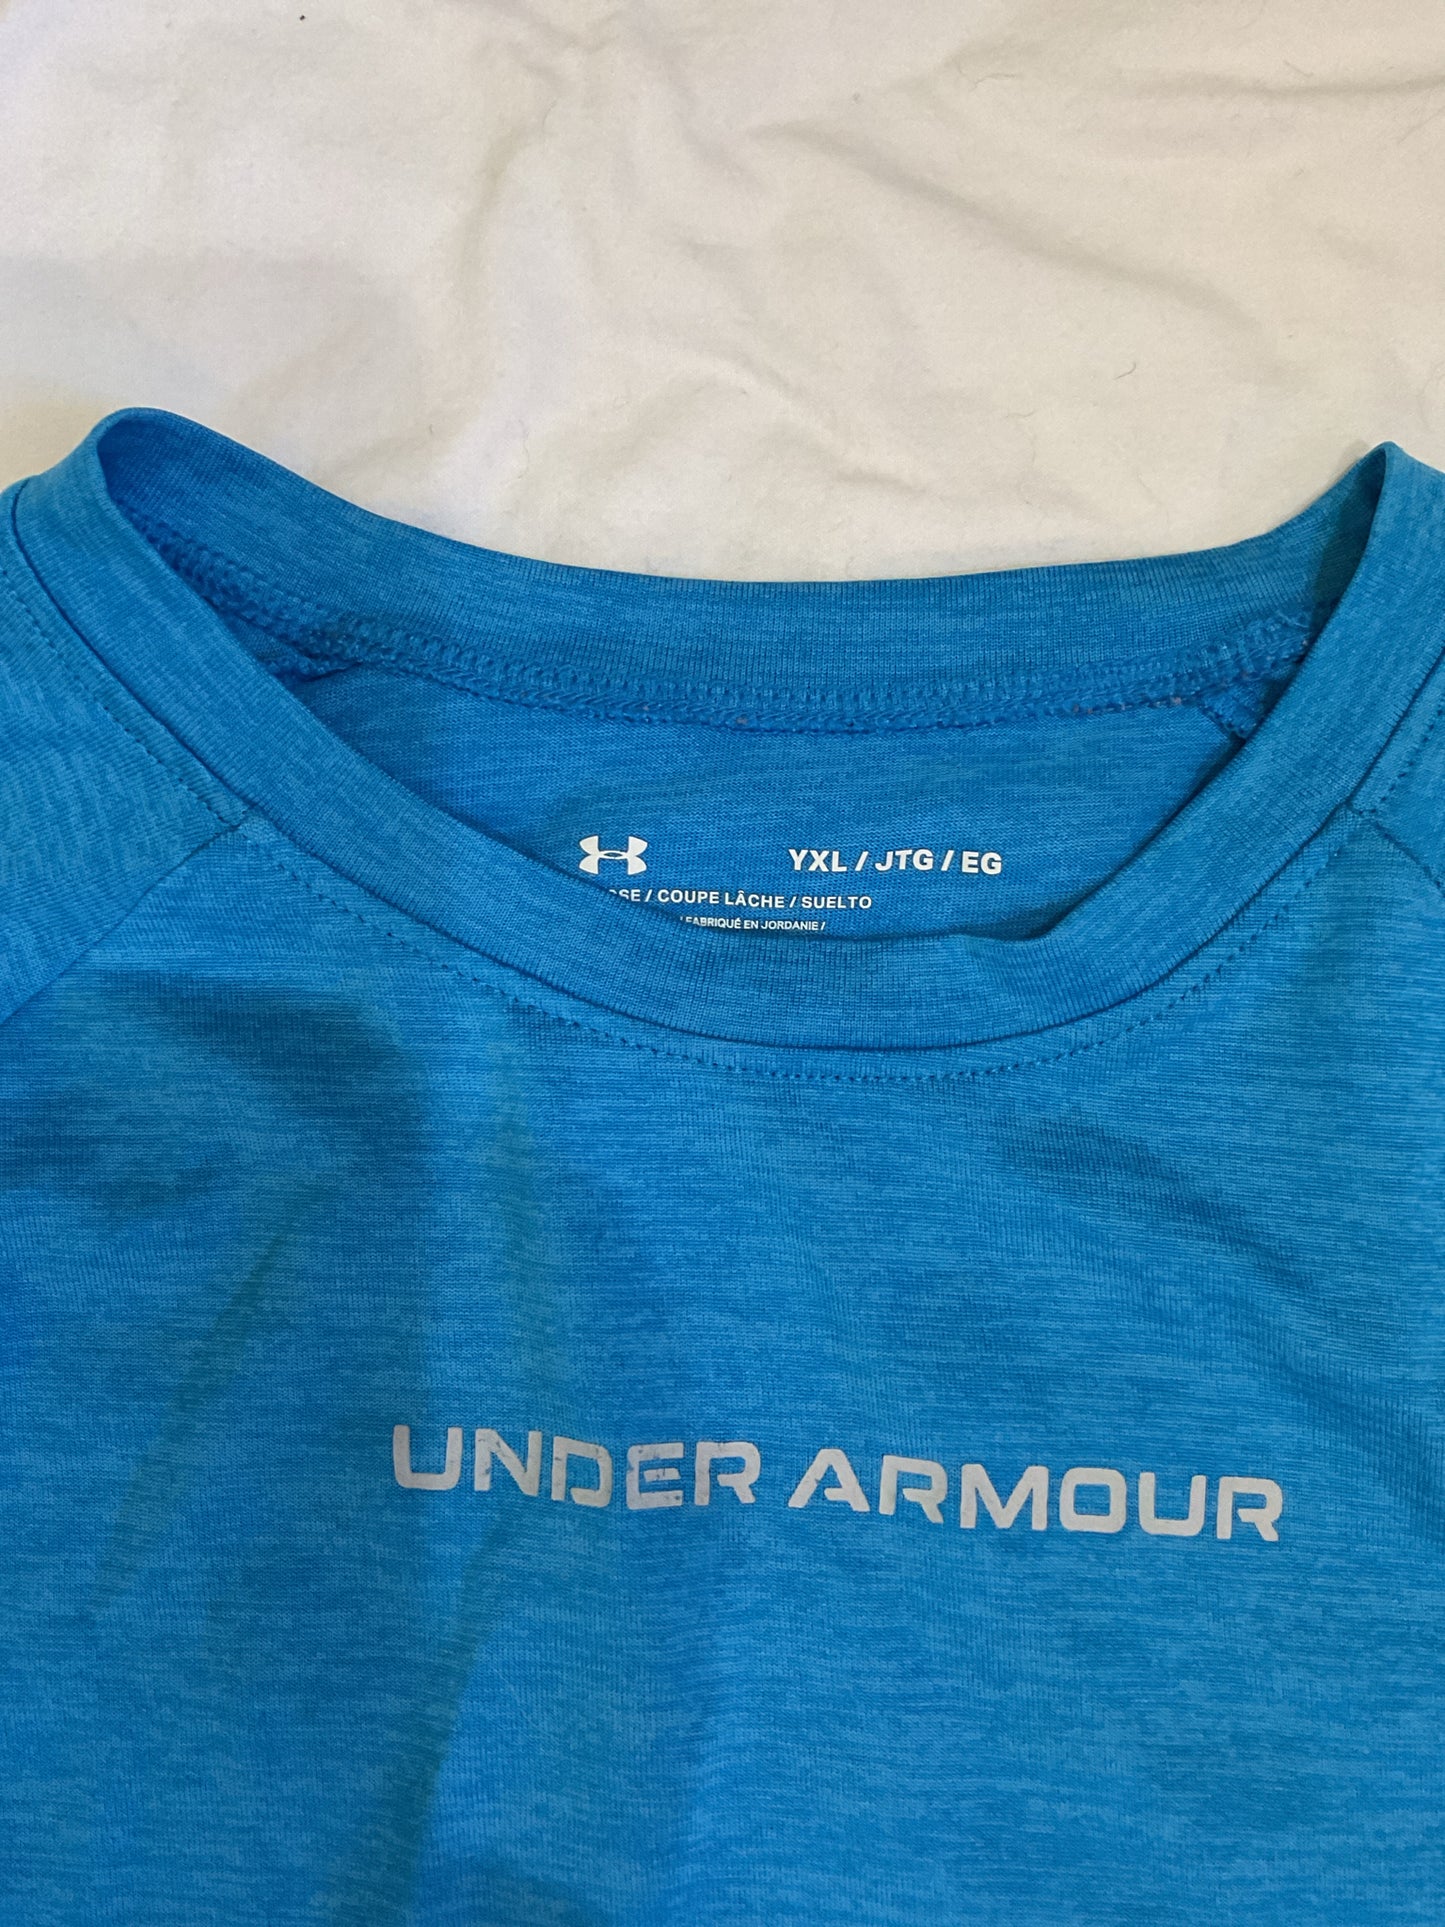 Under Armour Short Sleeve Shirt Boy's XL